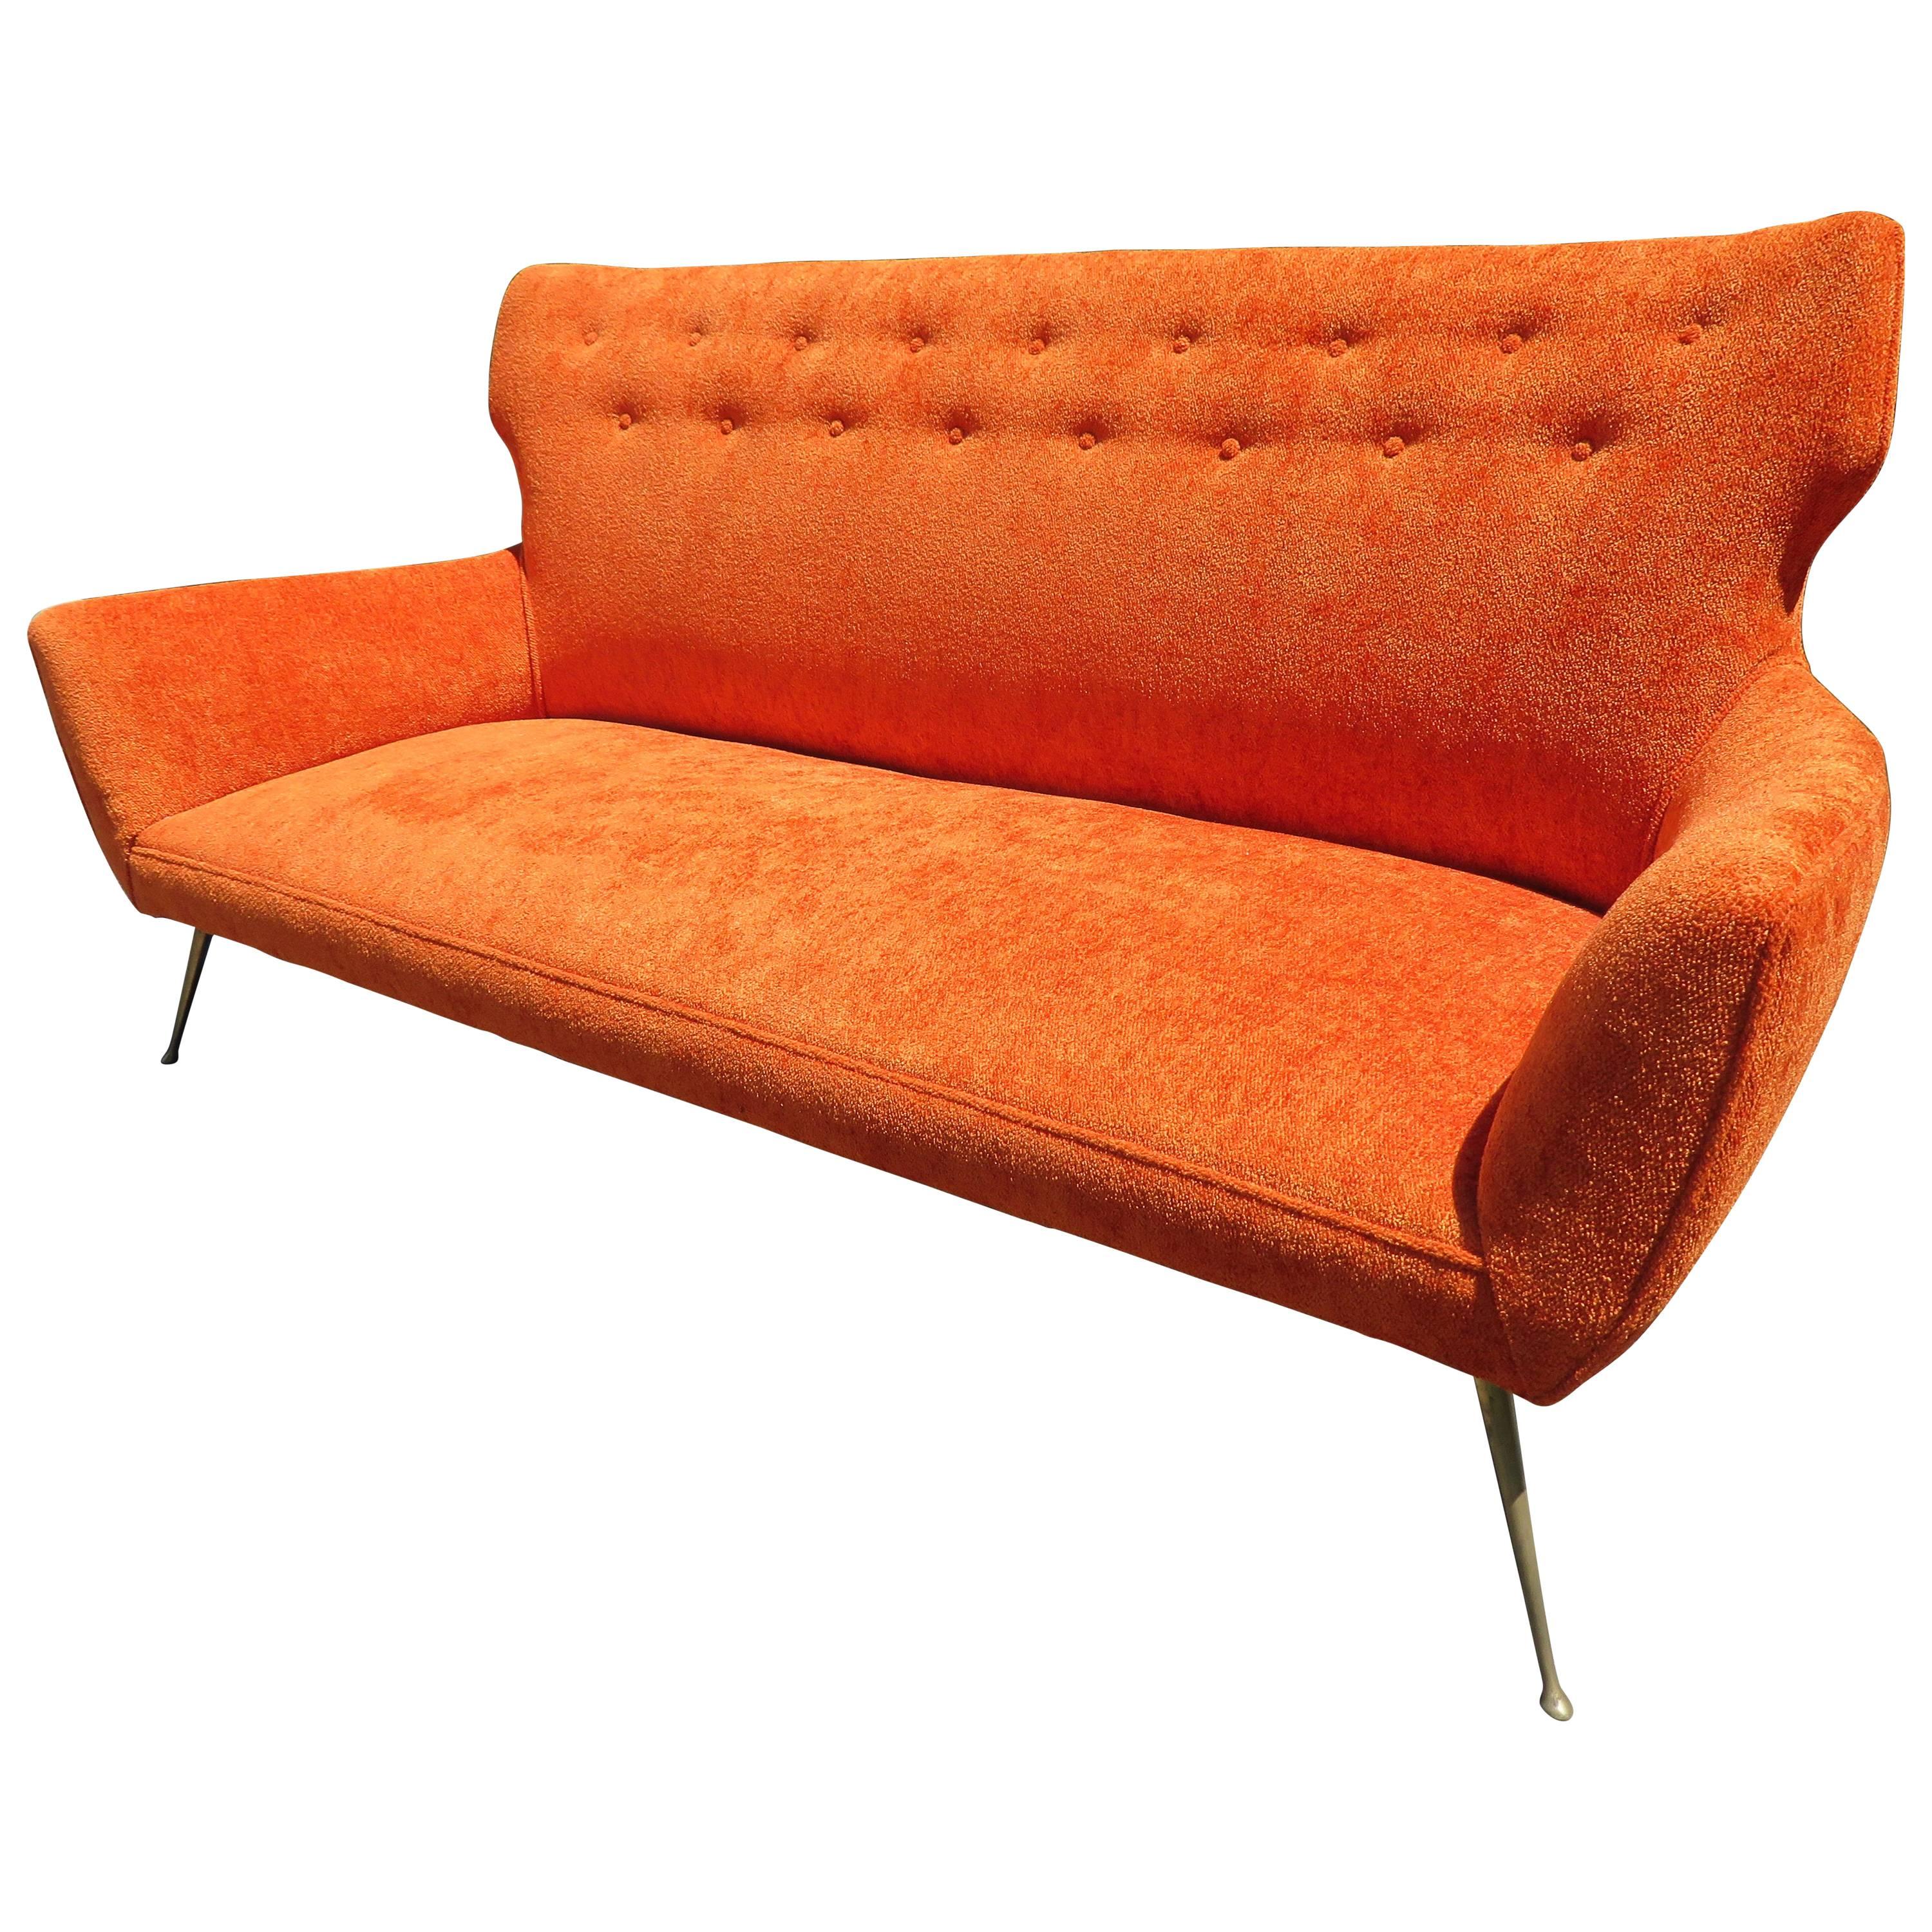 Stunning Italian Midcentury Gio Ponti Inspired Sofa with Brass Legs